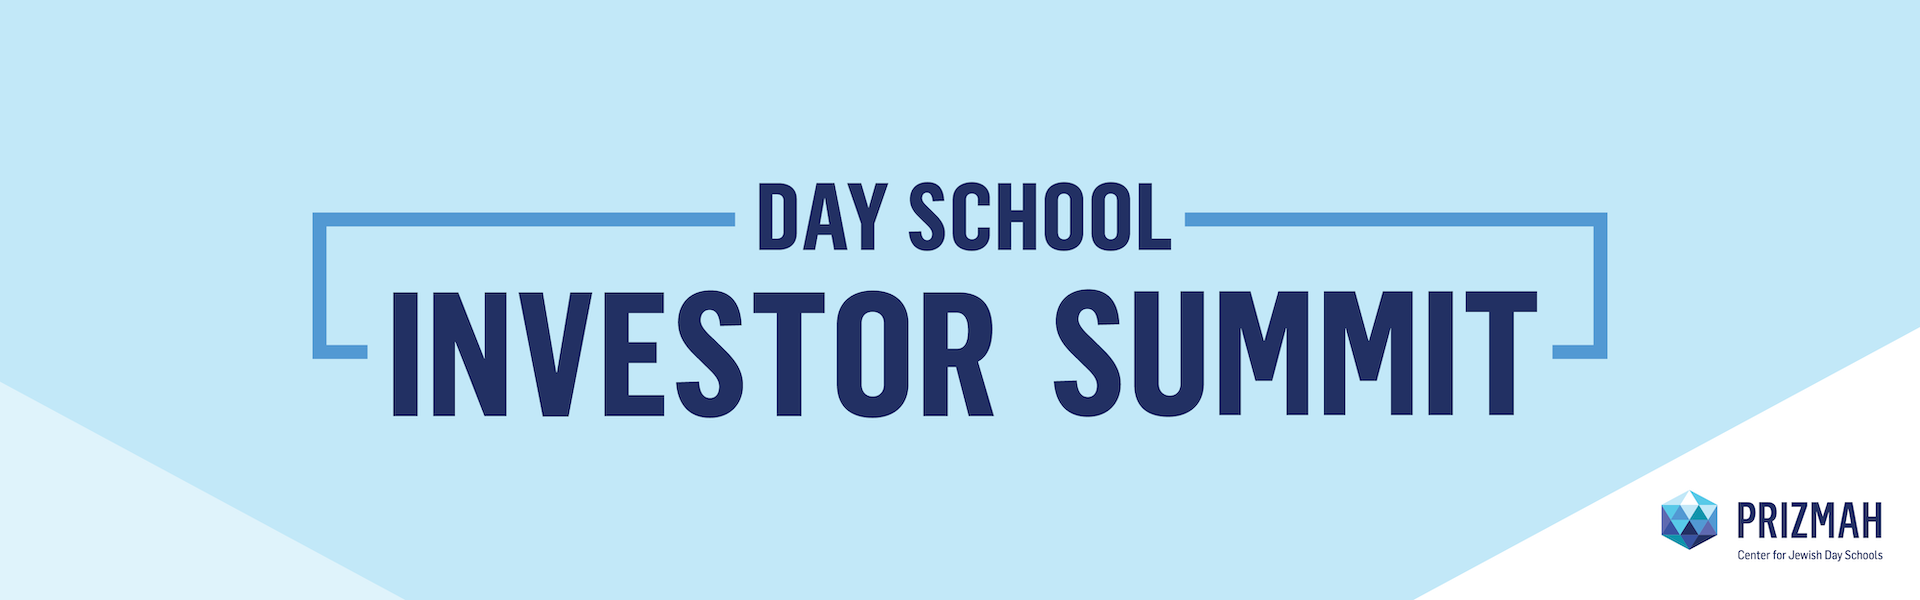 Day School Investor Summit